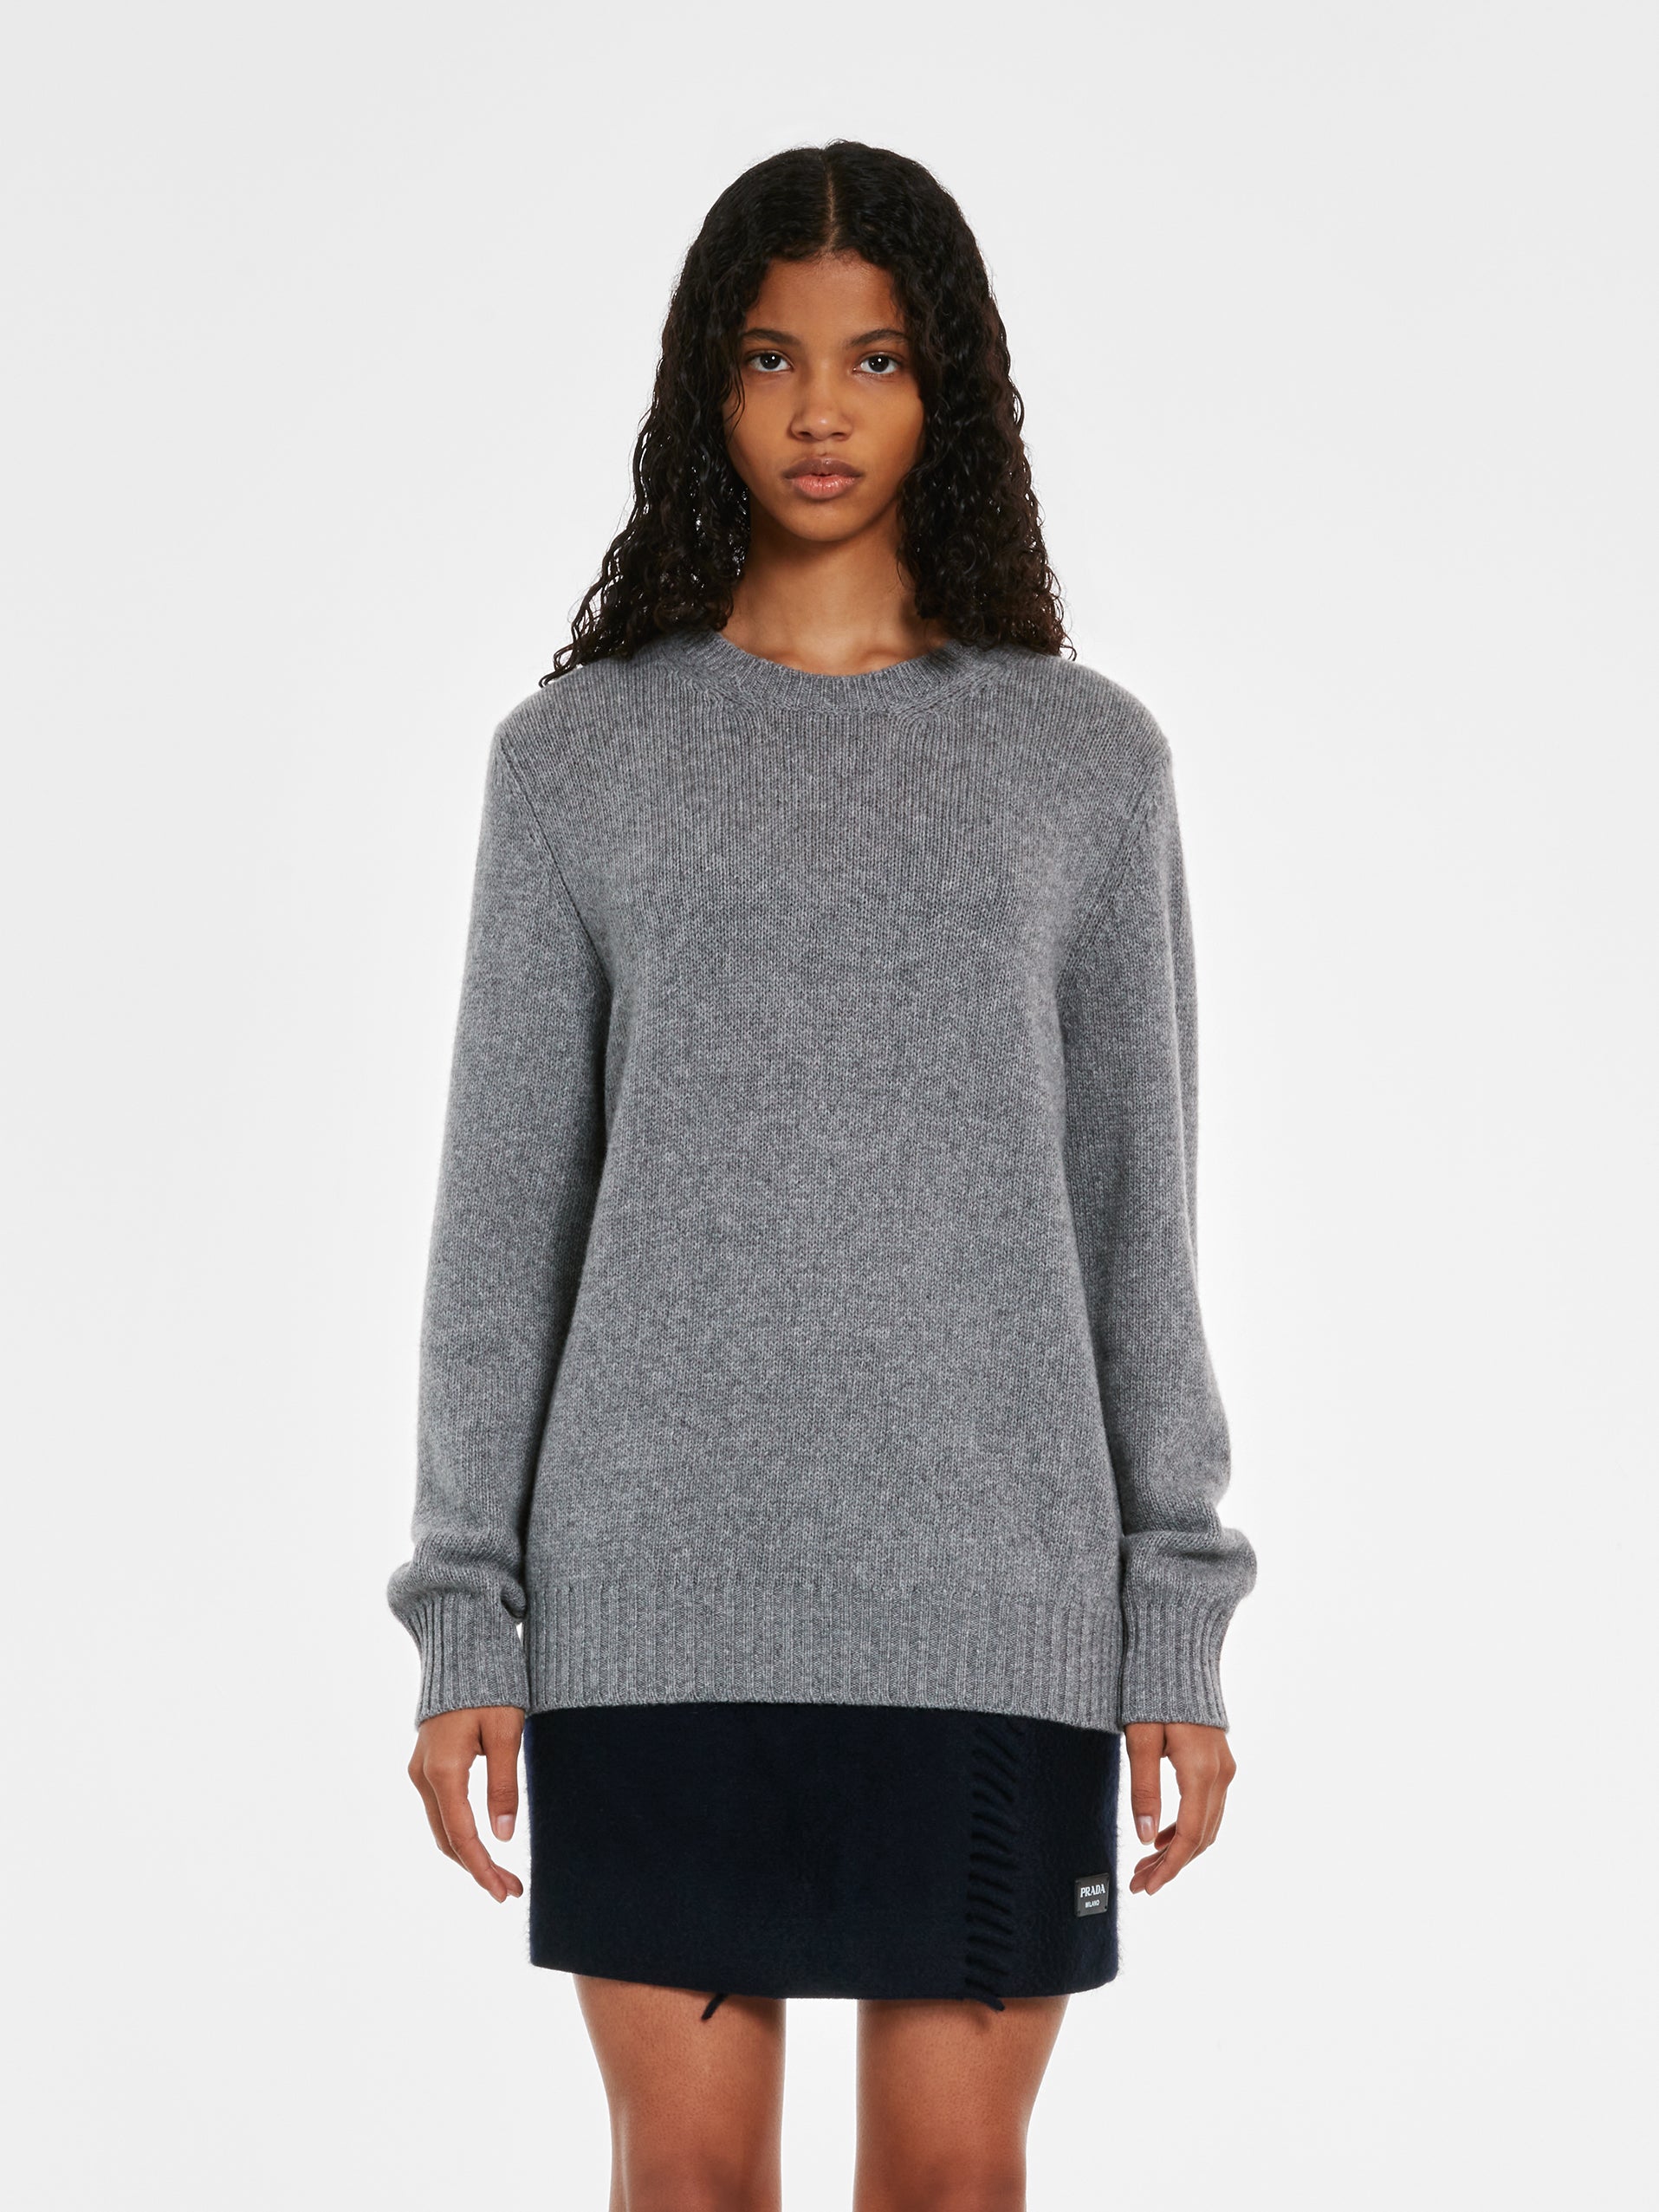 Prada - Women’s Wool and Cashmere Crew-Neck Sweater - (Grey) view 1